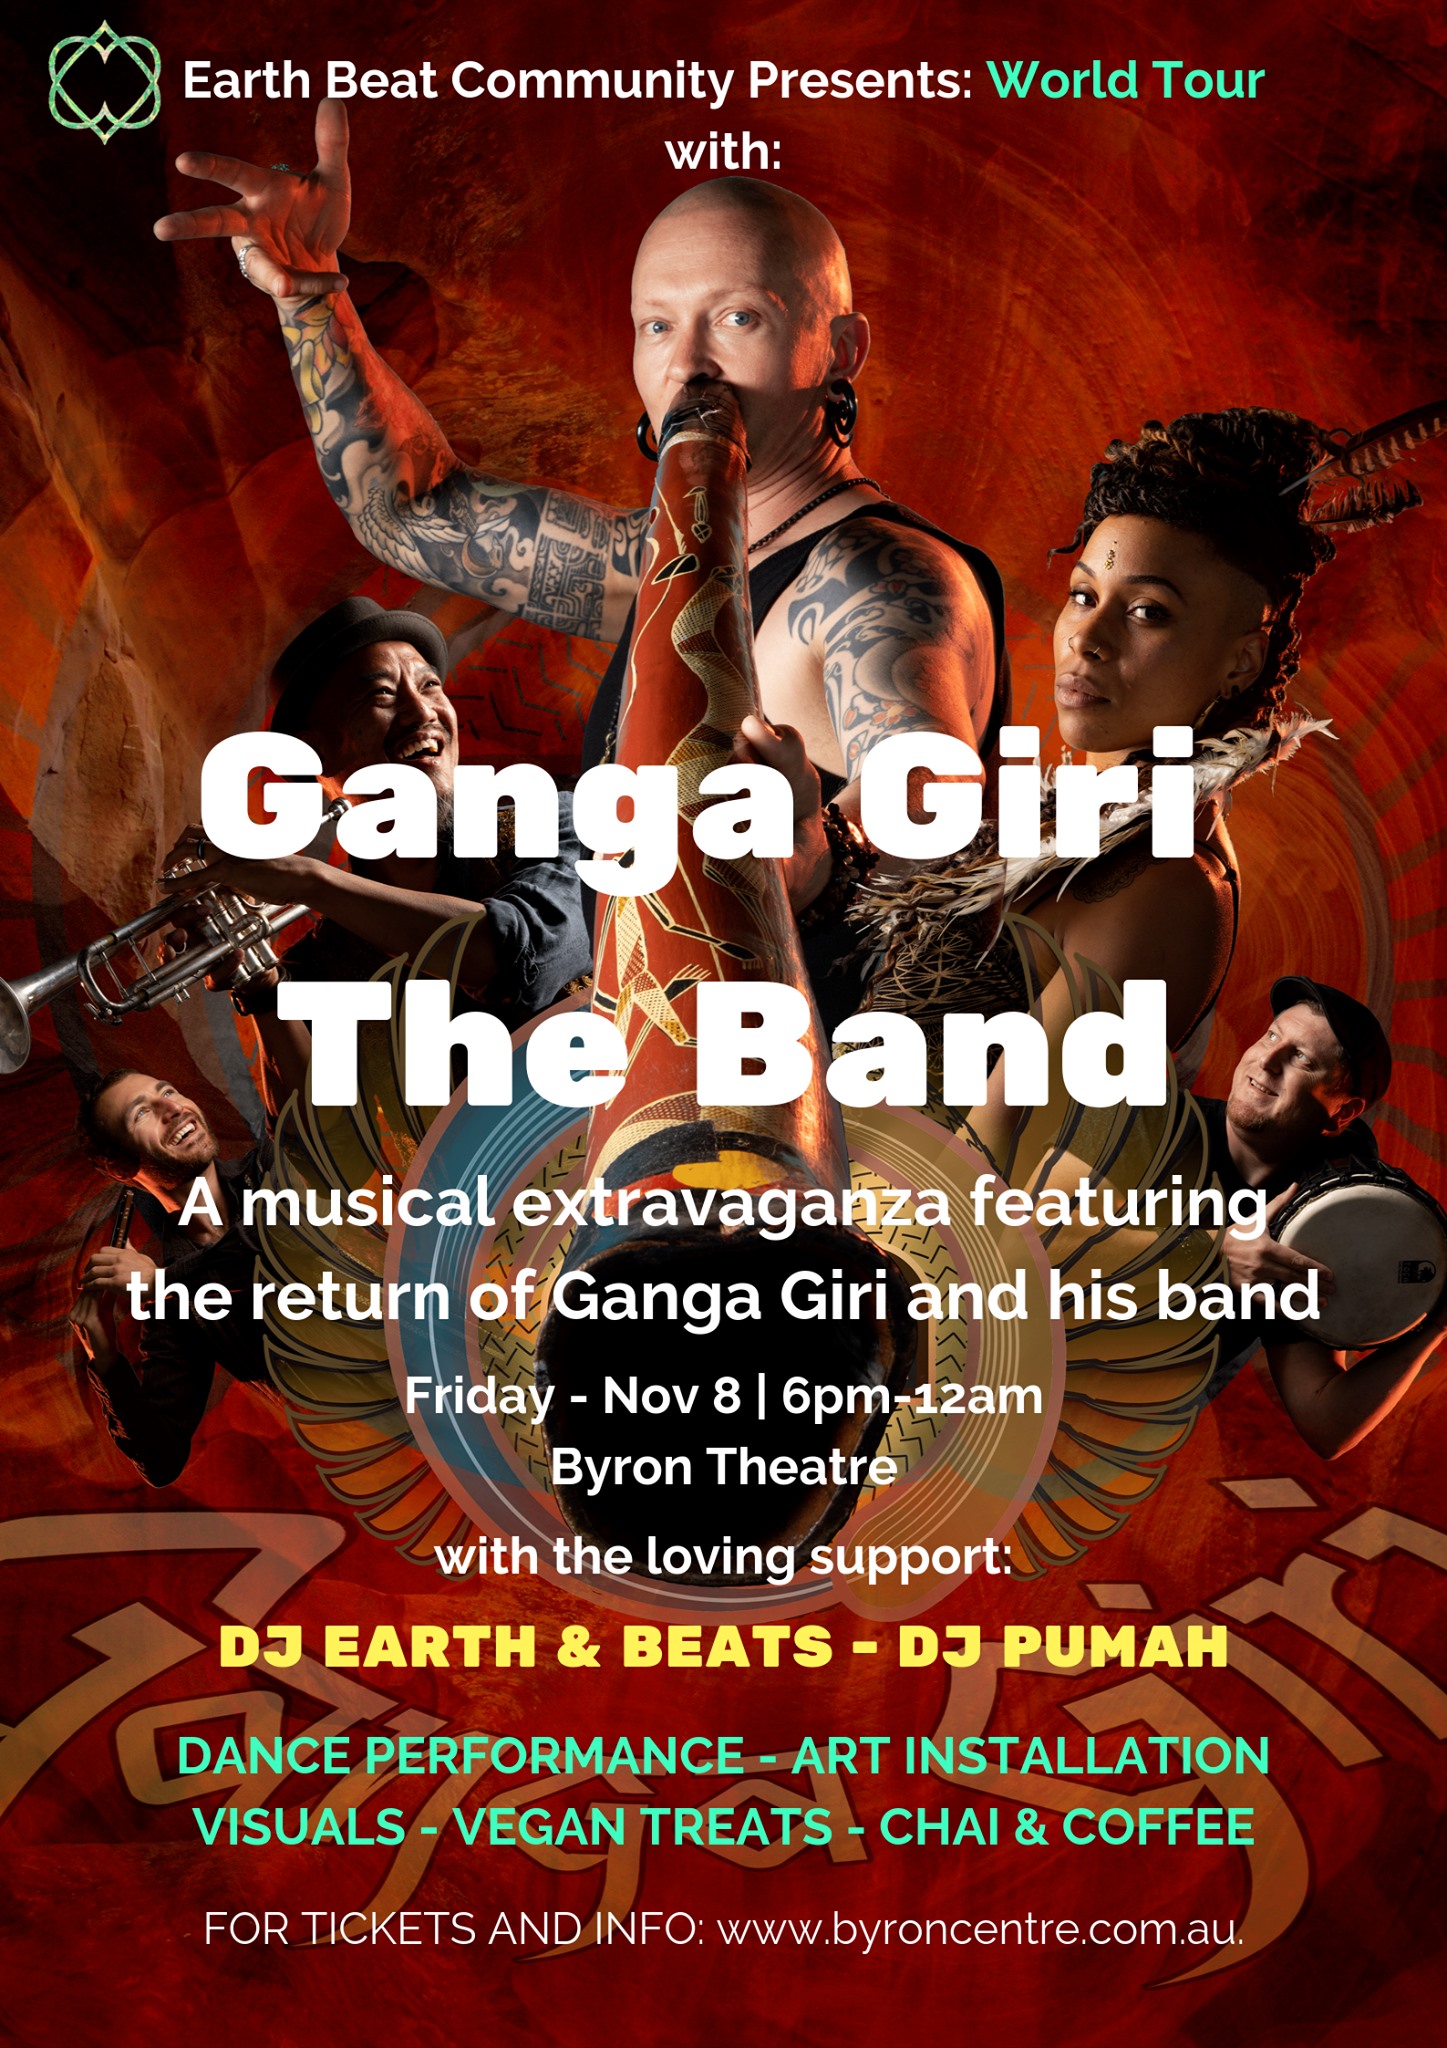 World Tour with GANGA GIRI BAND presented by Earth Beat Community